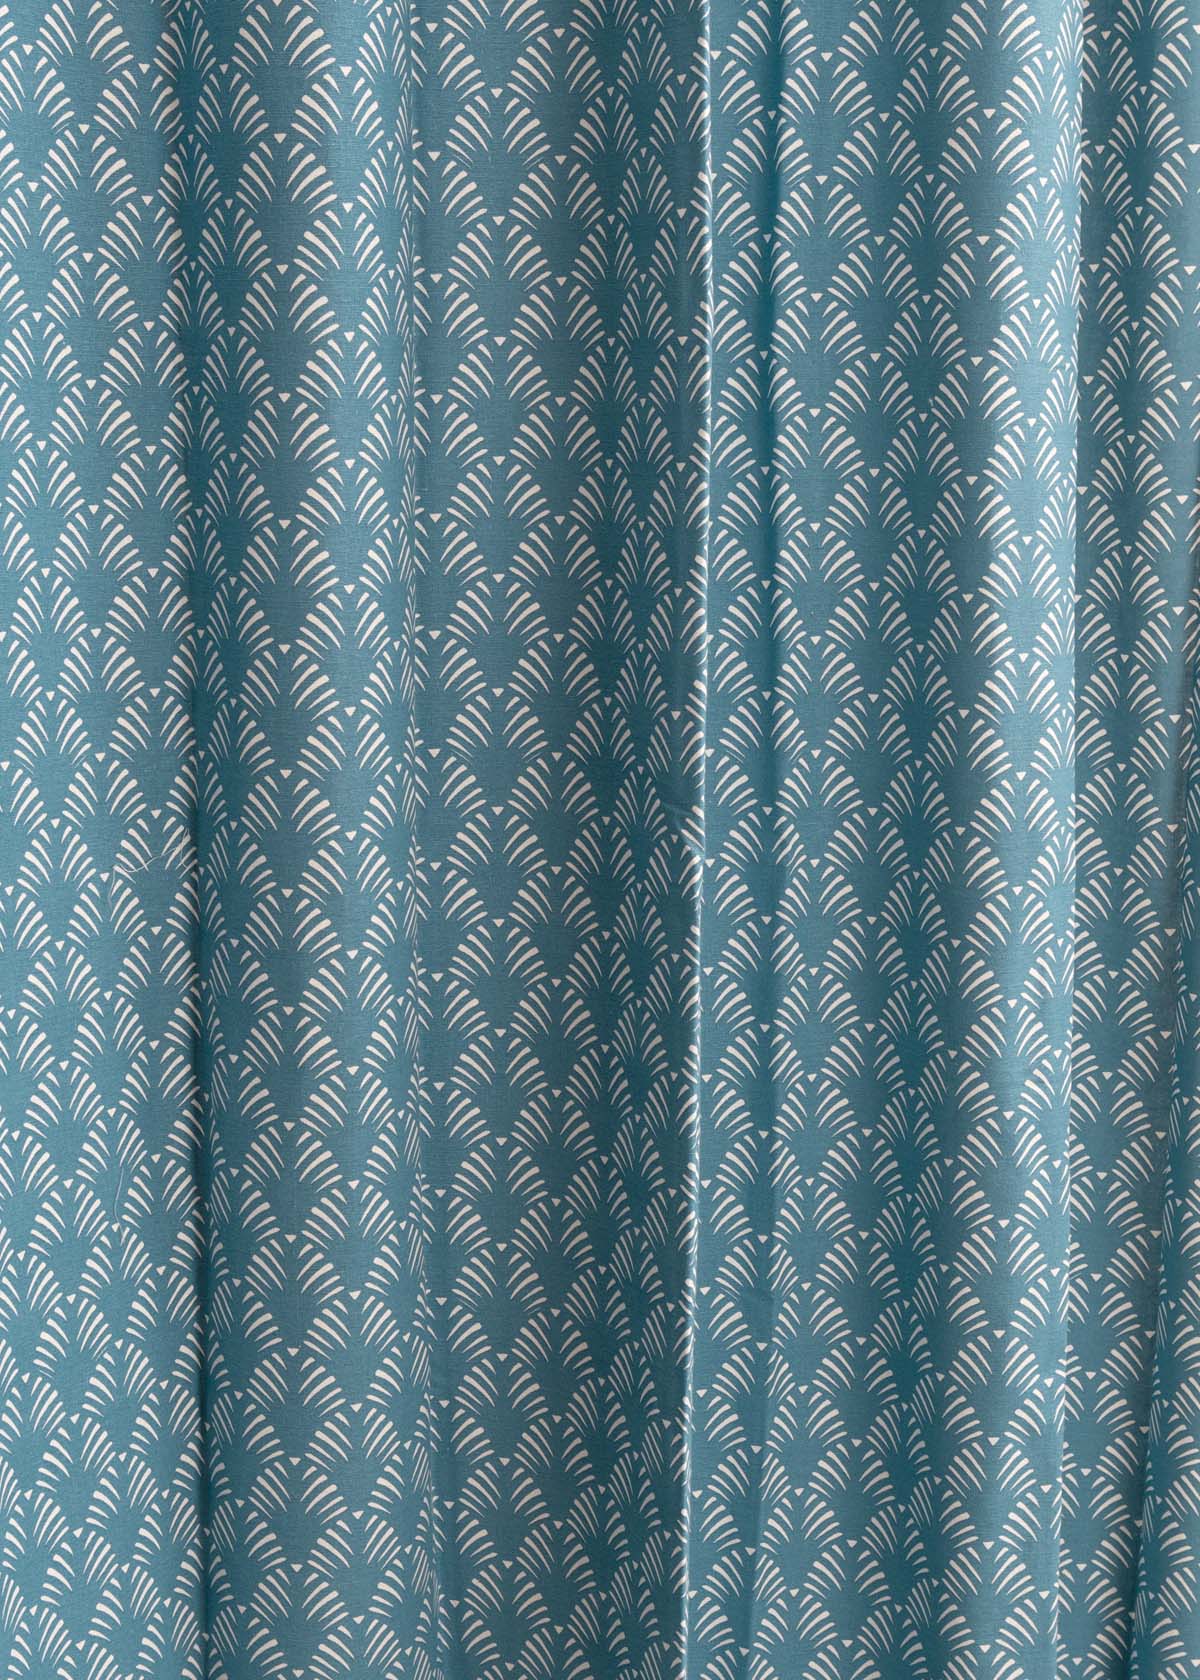 Pergola 100% cotton geometric curtain for living room & Bedroom - Room darkening - Indigo - Pack of 1